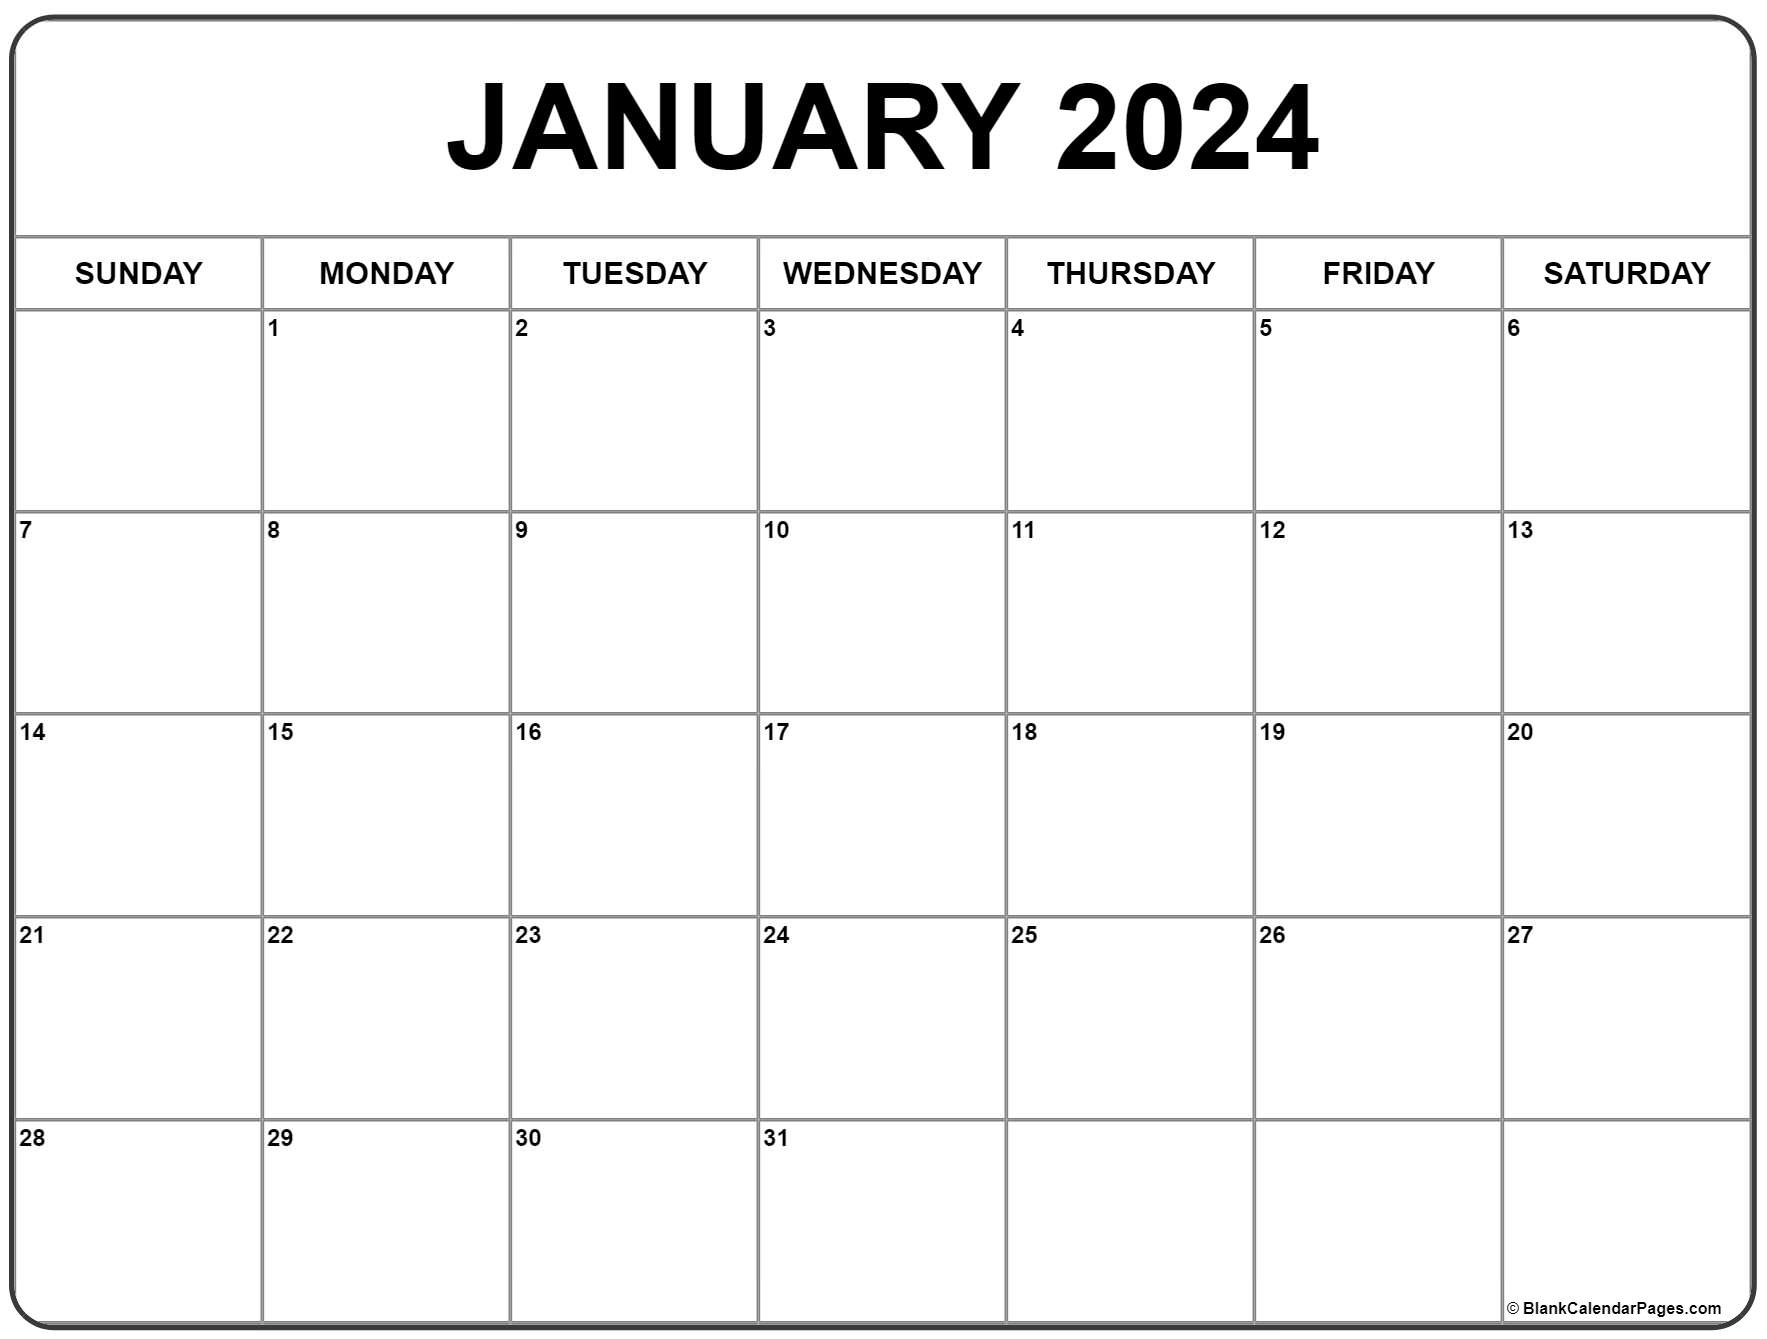 January 2024 Calendar | Free Printable Calendar for 2024 Monthly Calendar Printable